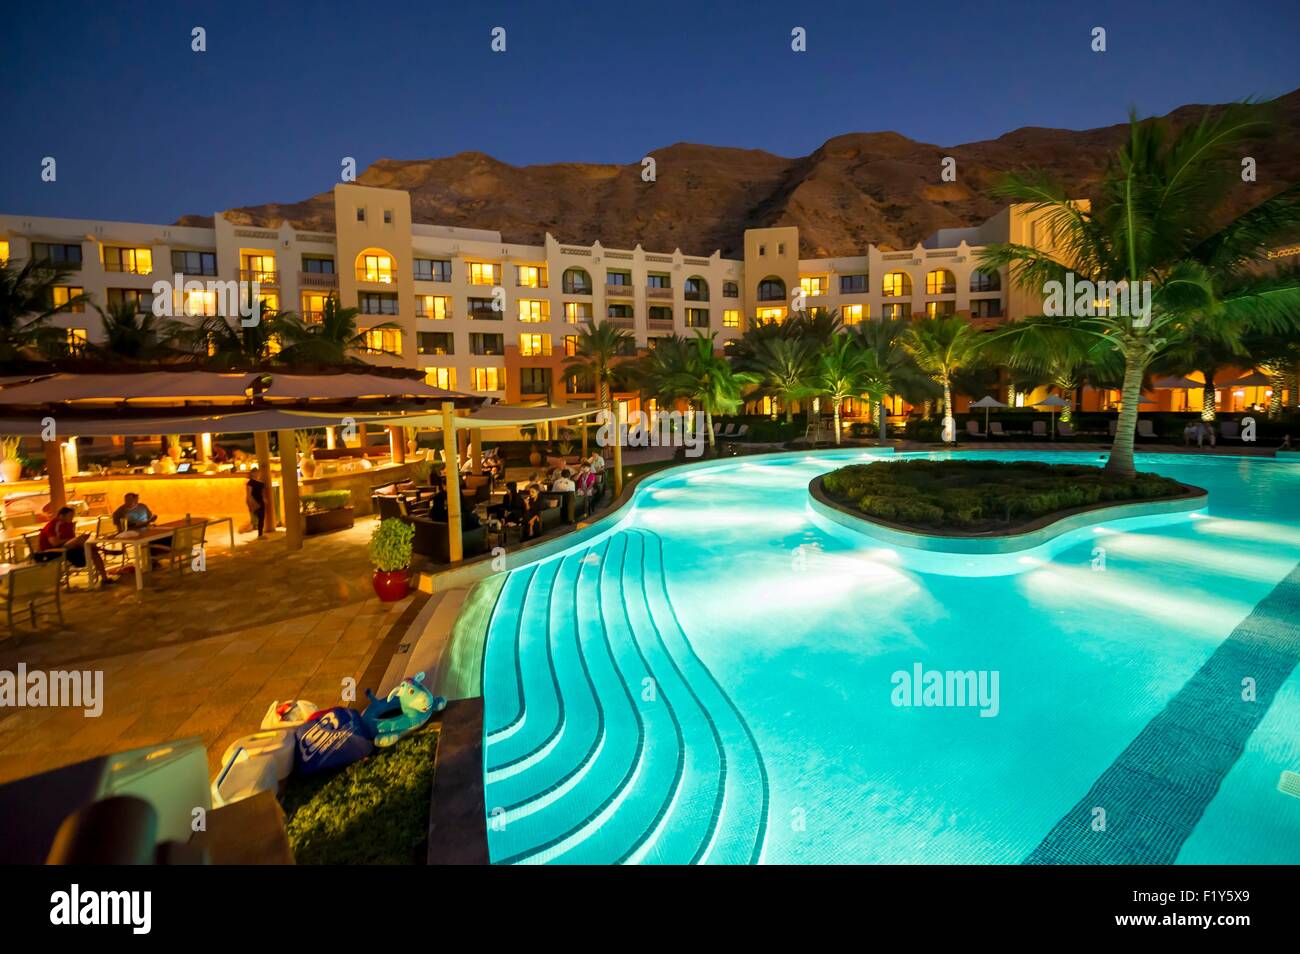 Oman, Muscat, Barr al Jissah Resort, Shangri La hotel Stock Photo